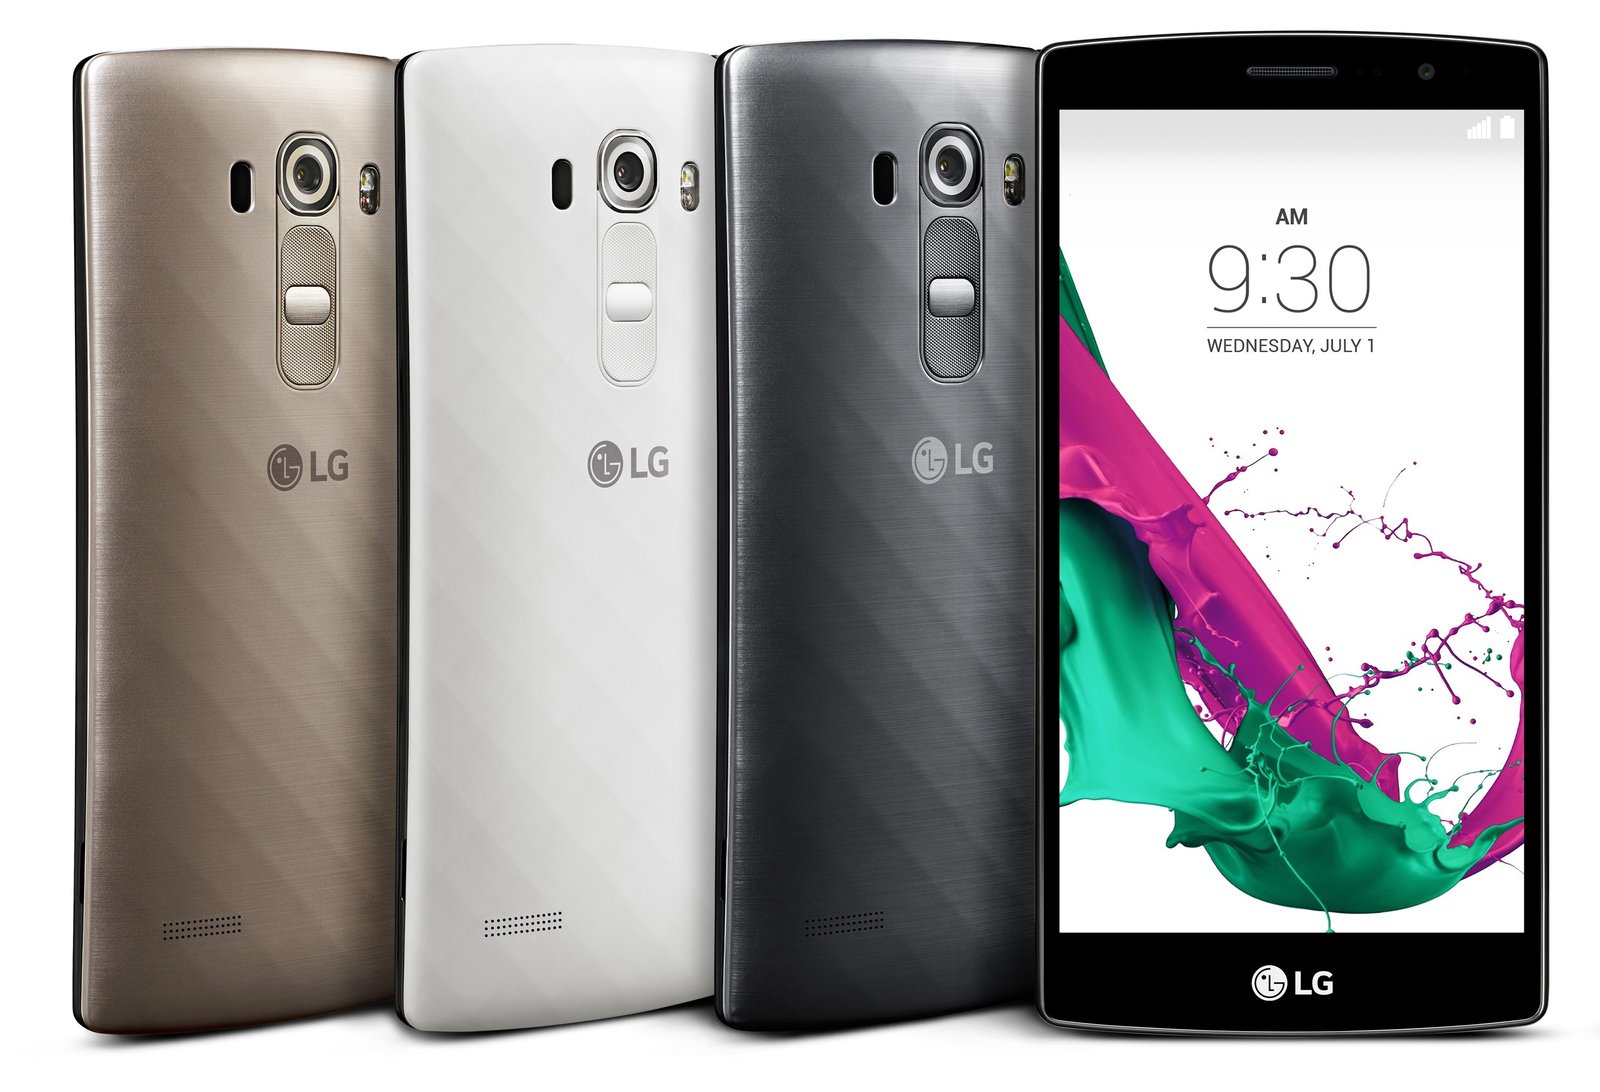 LG-G4s-LG-G4-Beat-photo-1